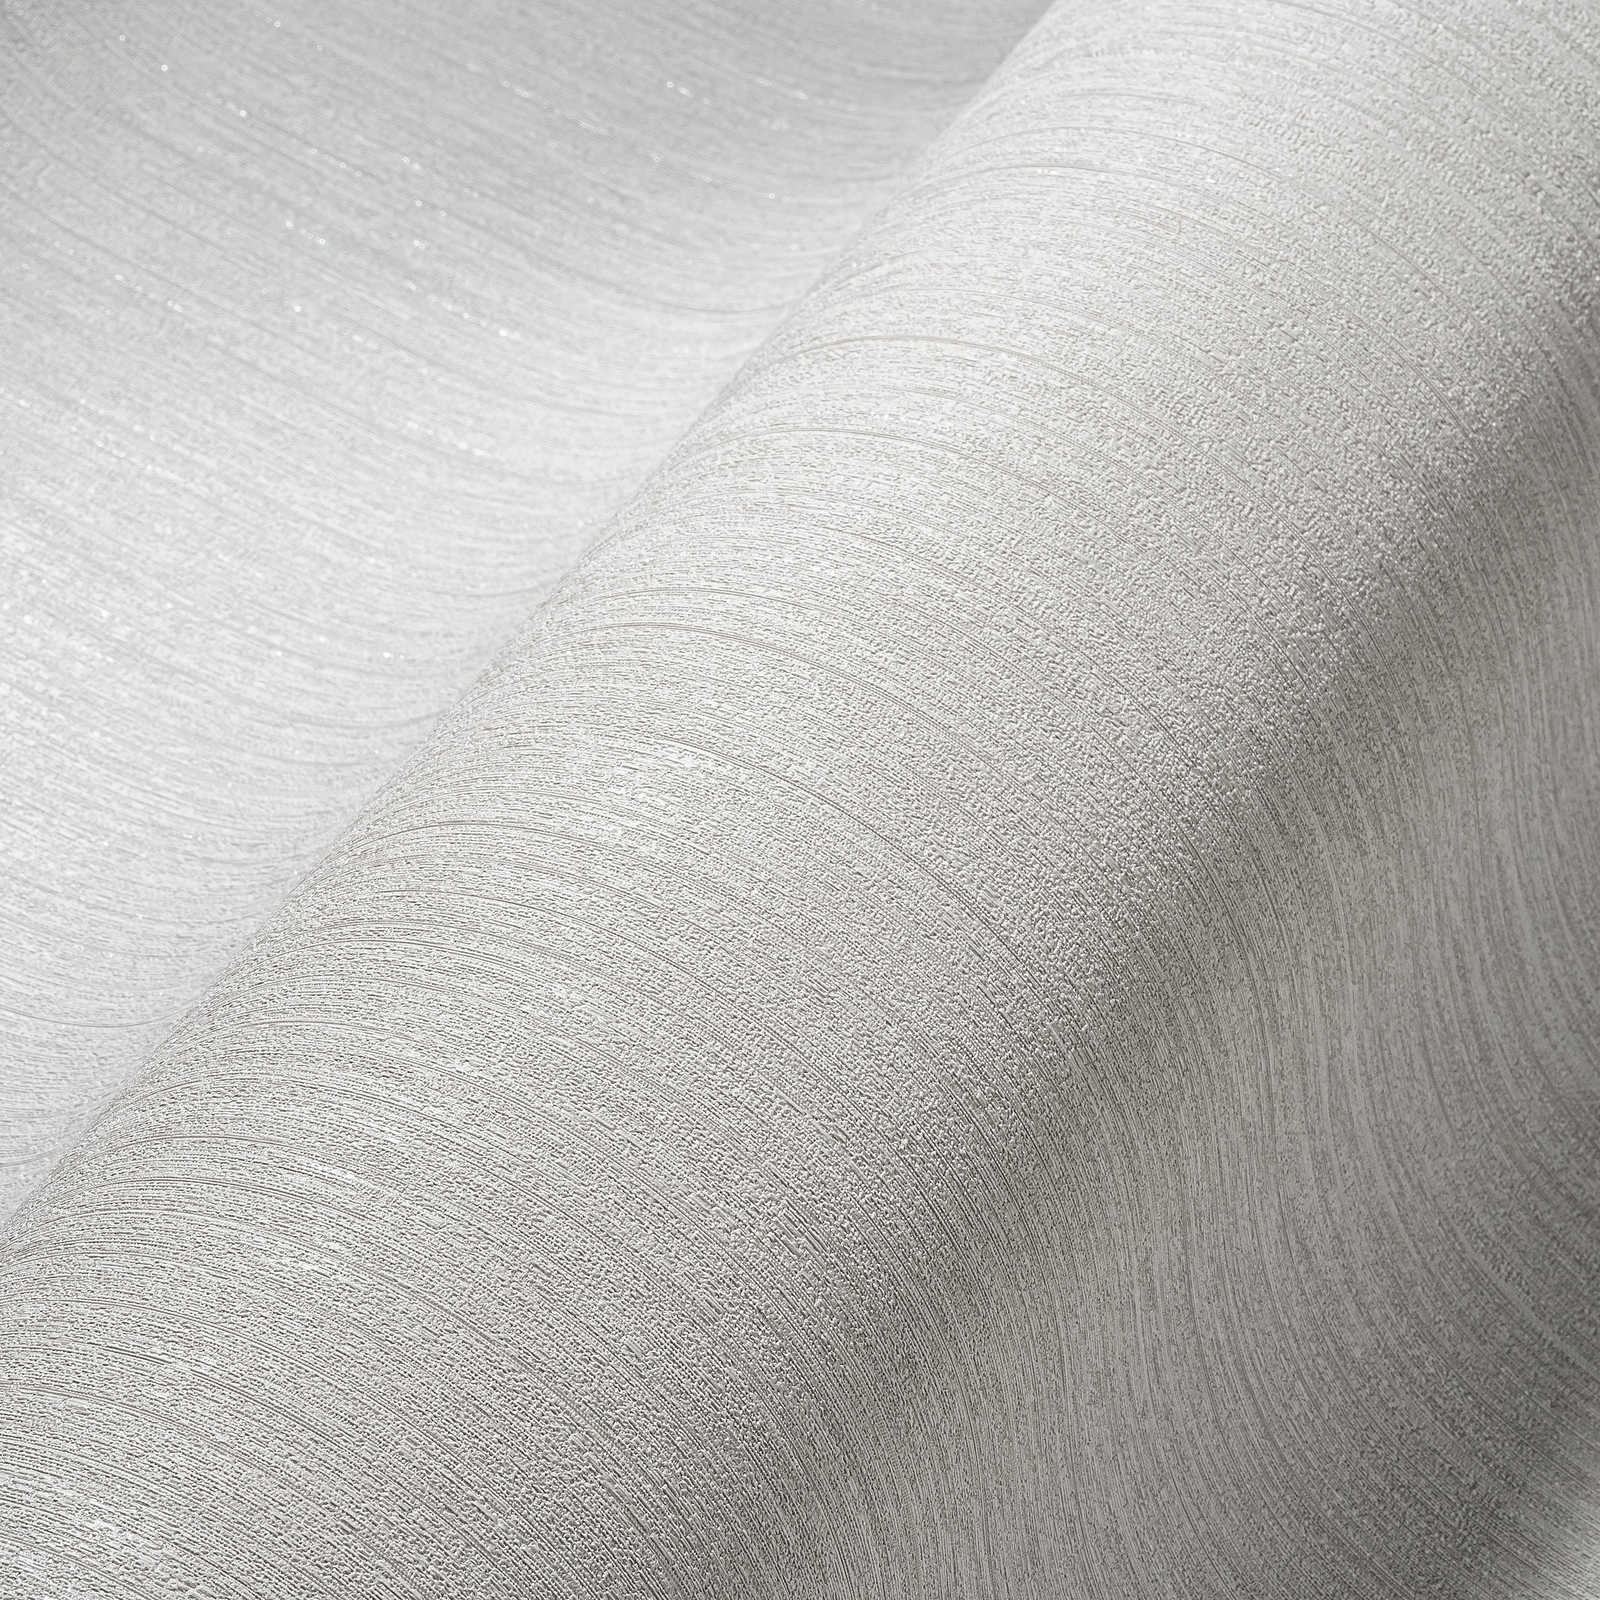             Carta da parati in tessuto non tessuto grigio chiaro con motivo Sturkut, tinta unita e seta opaca
        